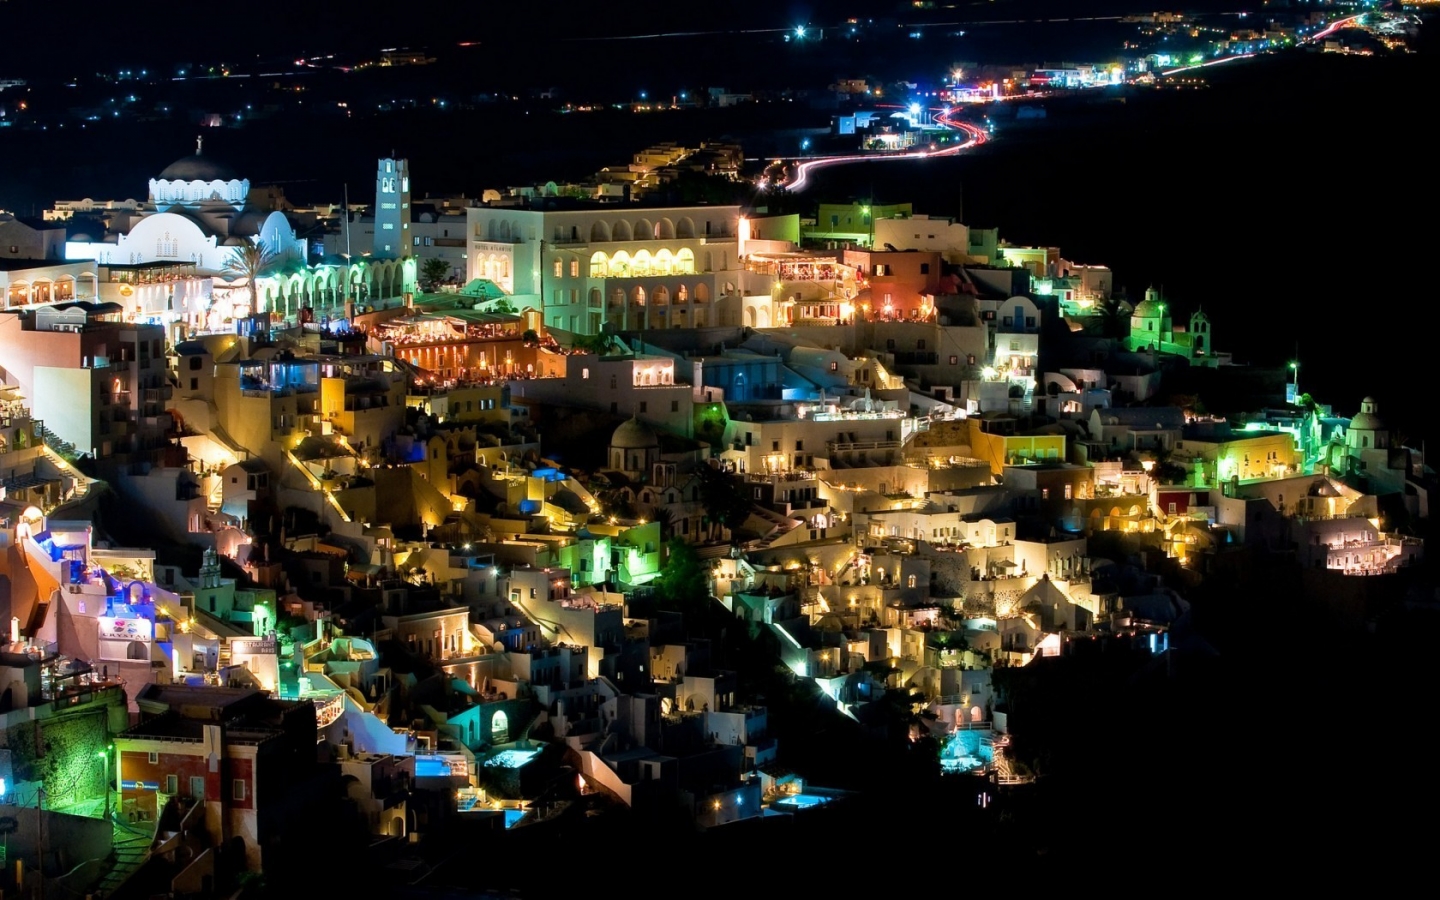 Santorini Night View for 1440 x 900 widescreen resolution